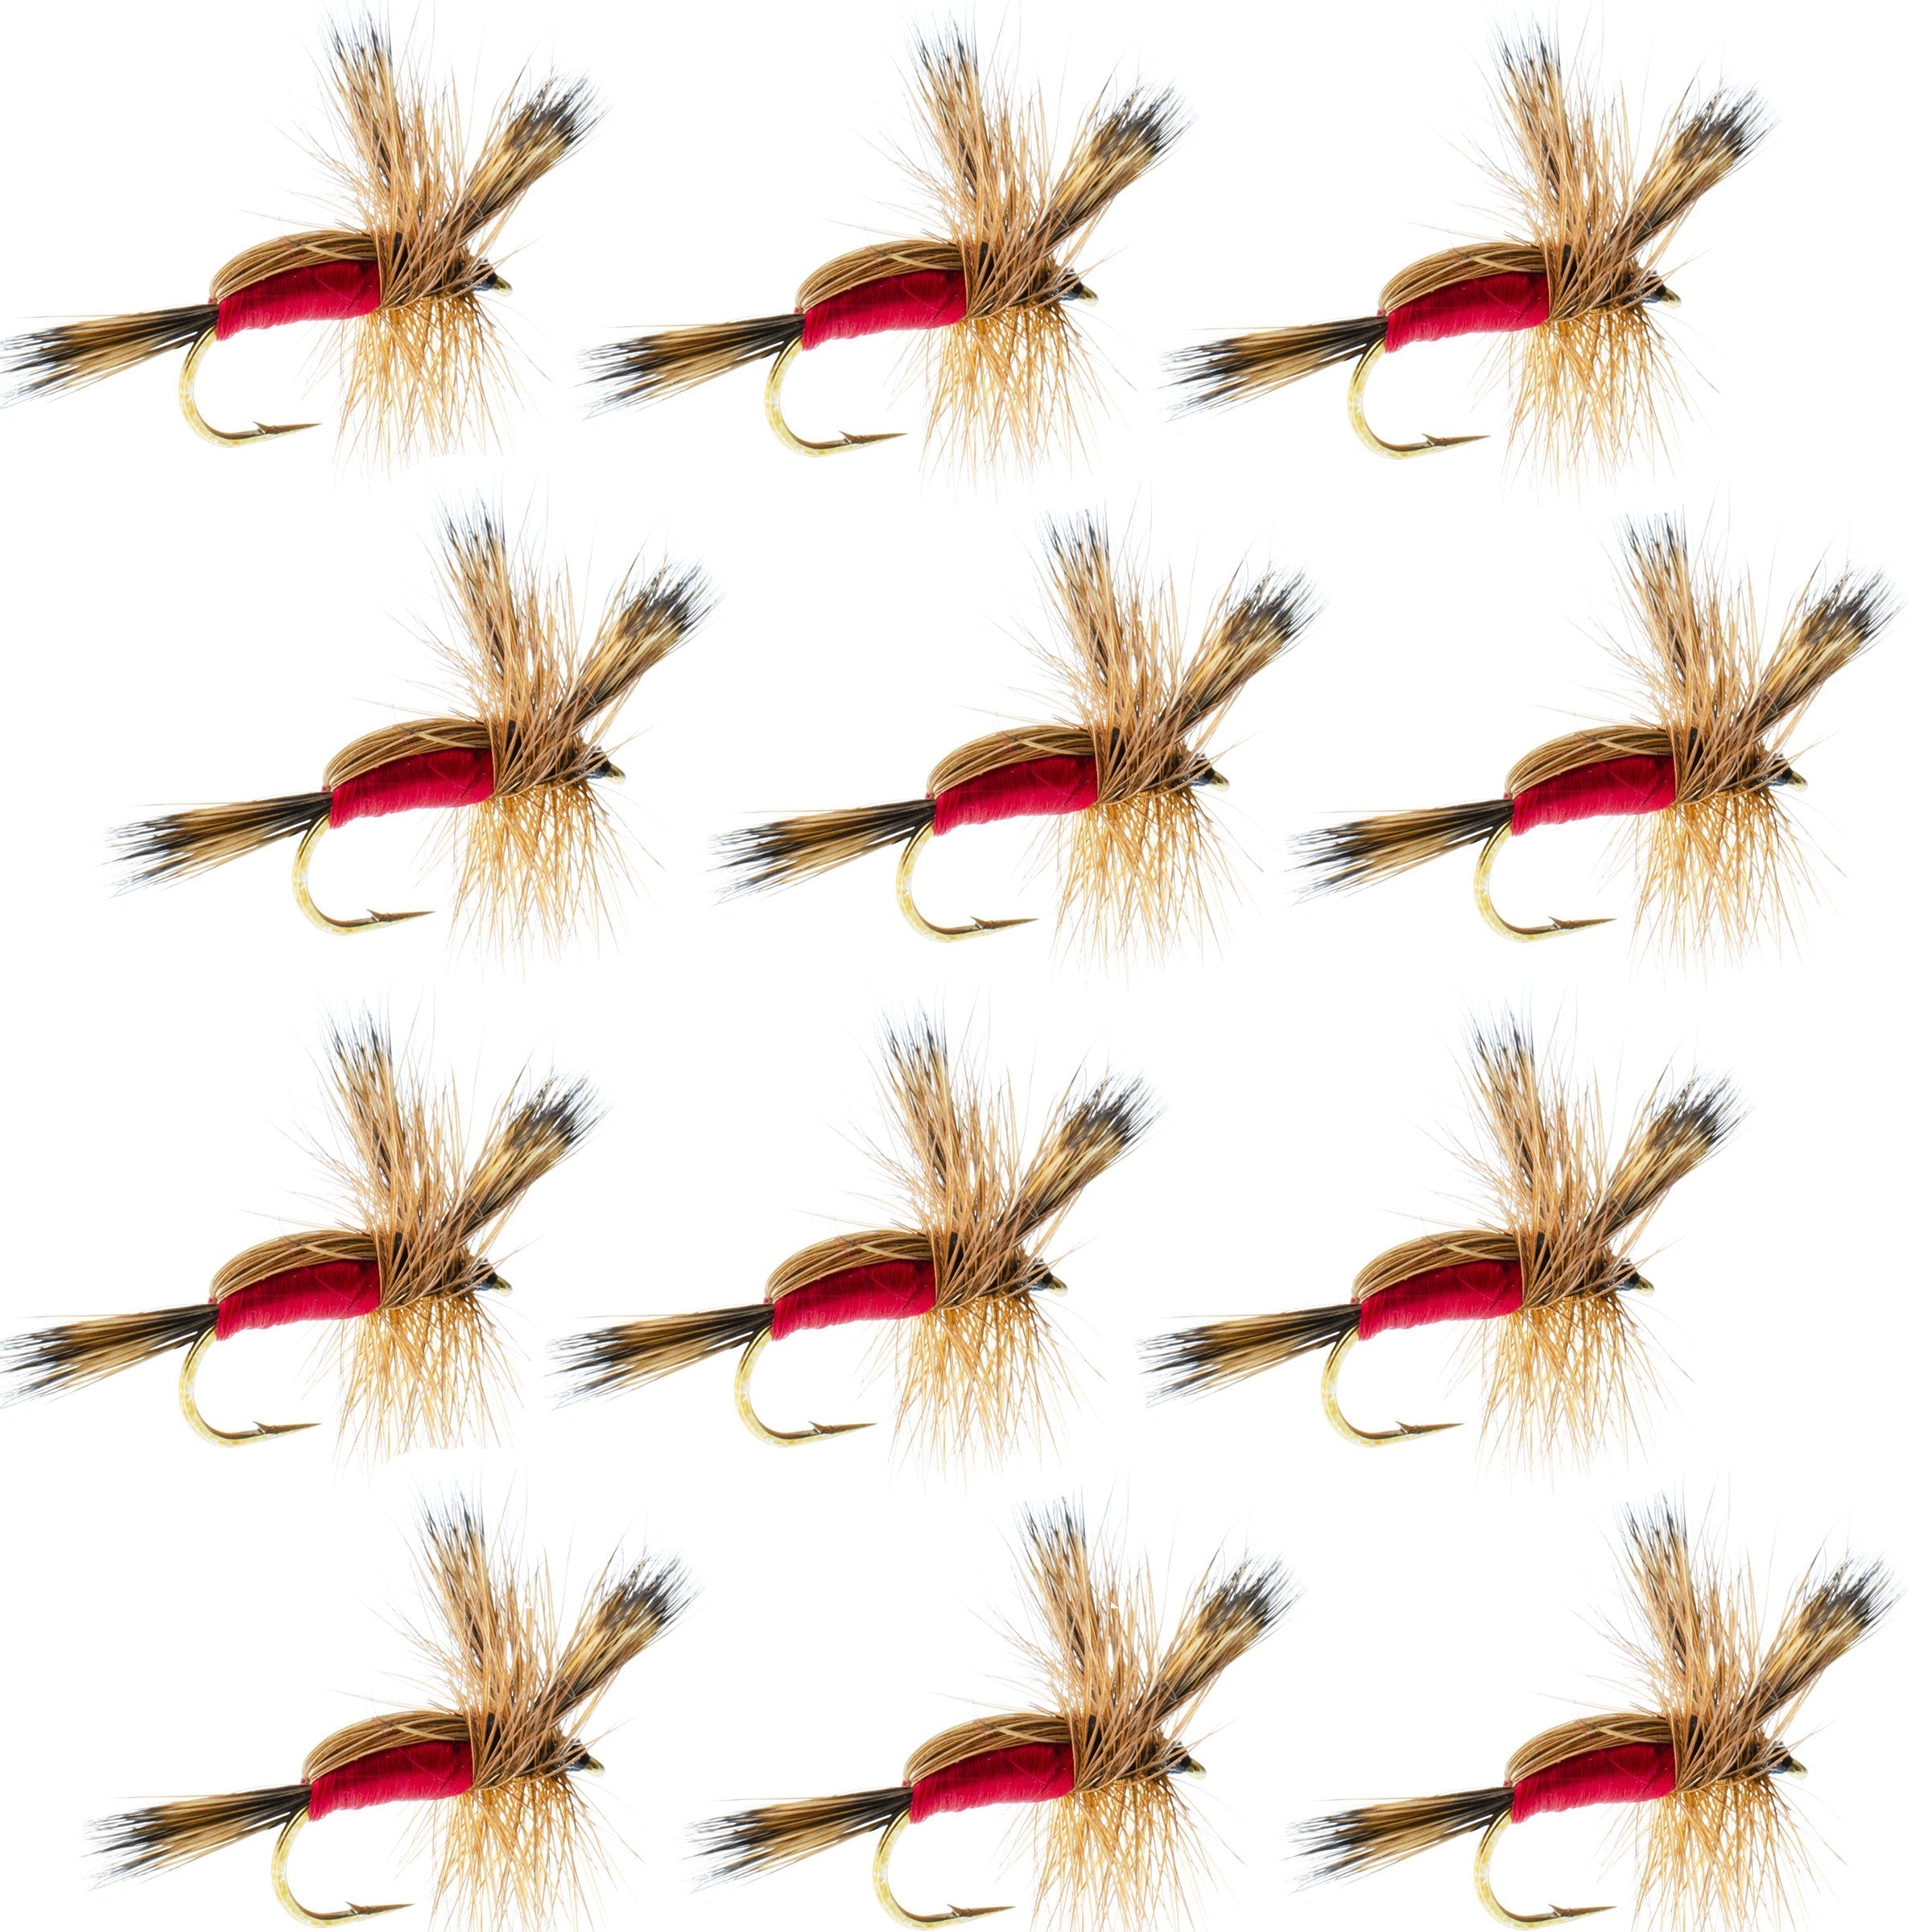 Red Humpy Classic Hair Wing Dry Fly - 1 docena de anzuelos para moscas, tamaño 14